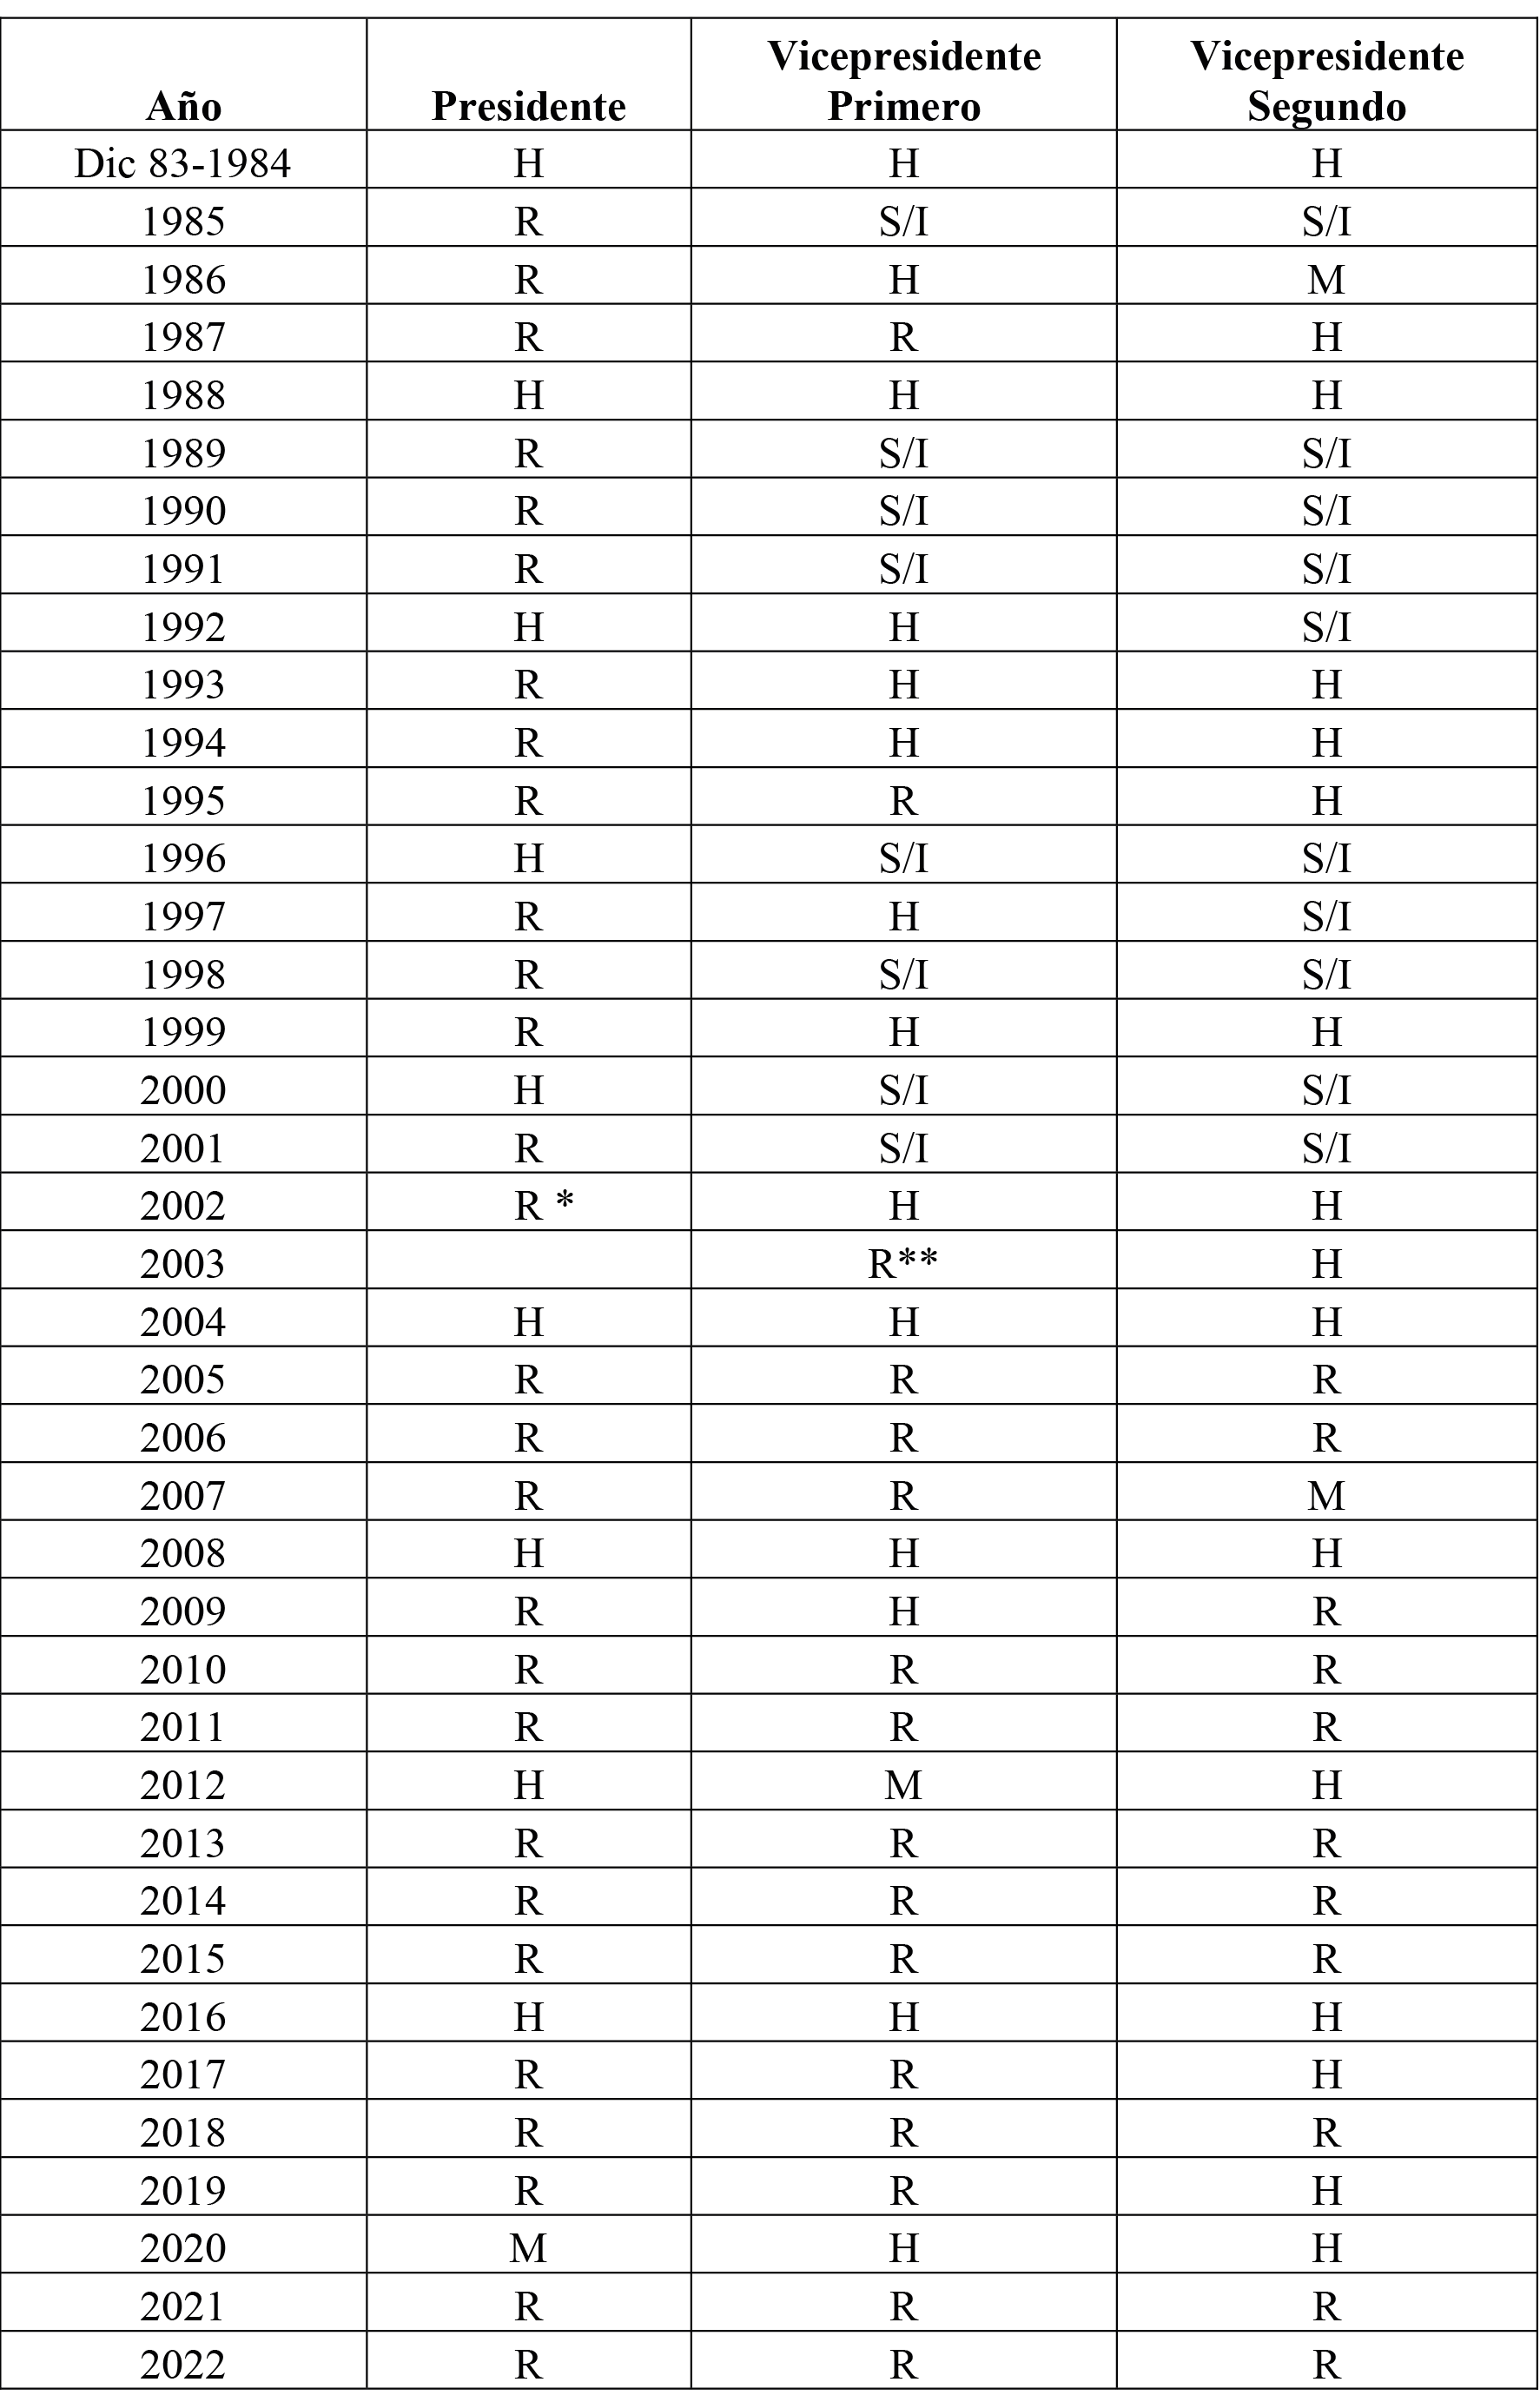 Autoridades históricas por género.
Cámara de Senadores de Entre Ríos, 1983-2022